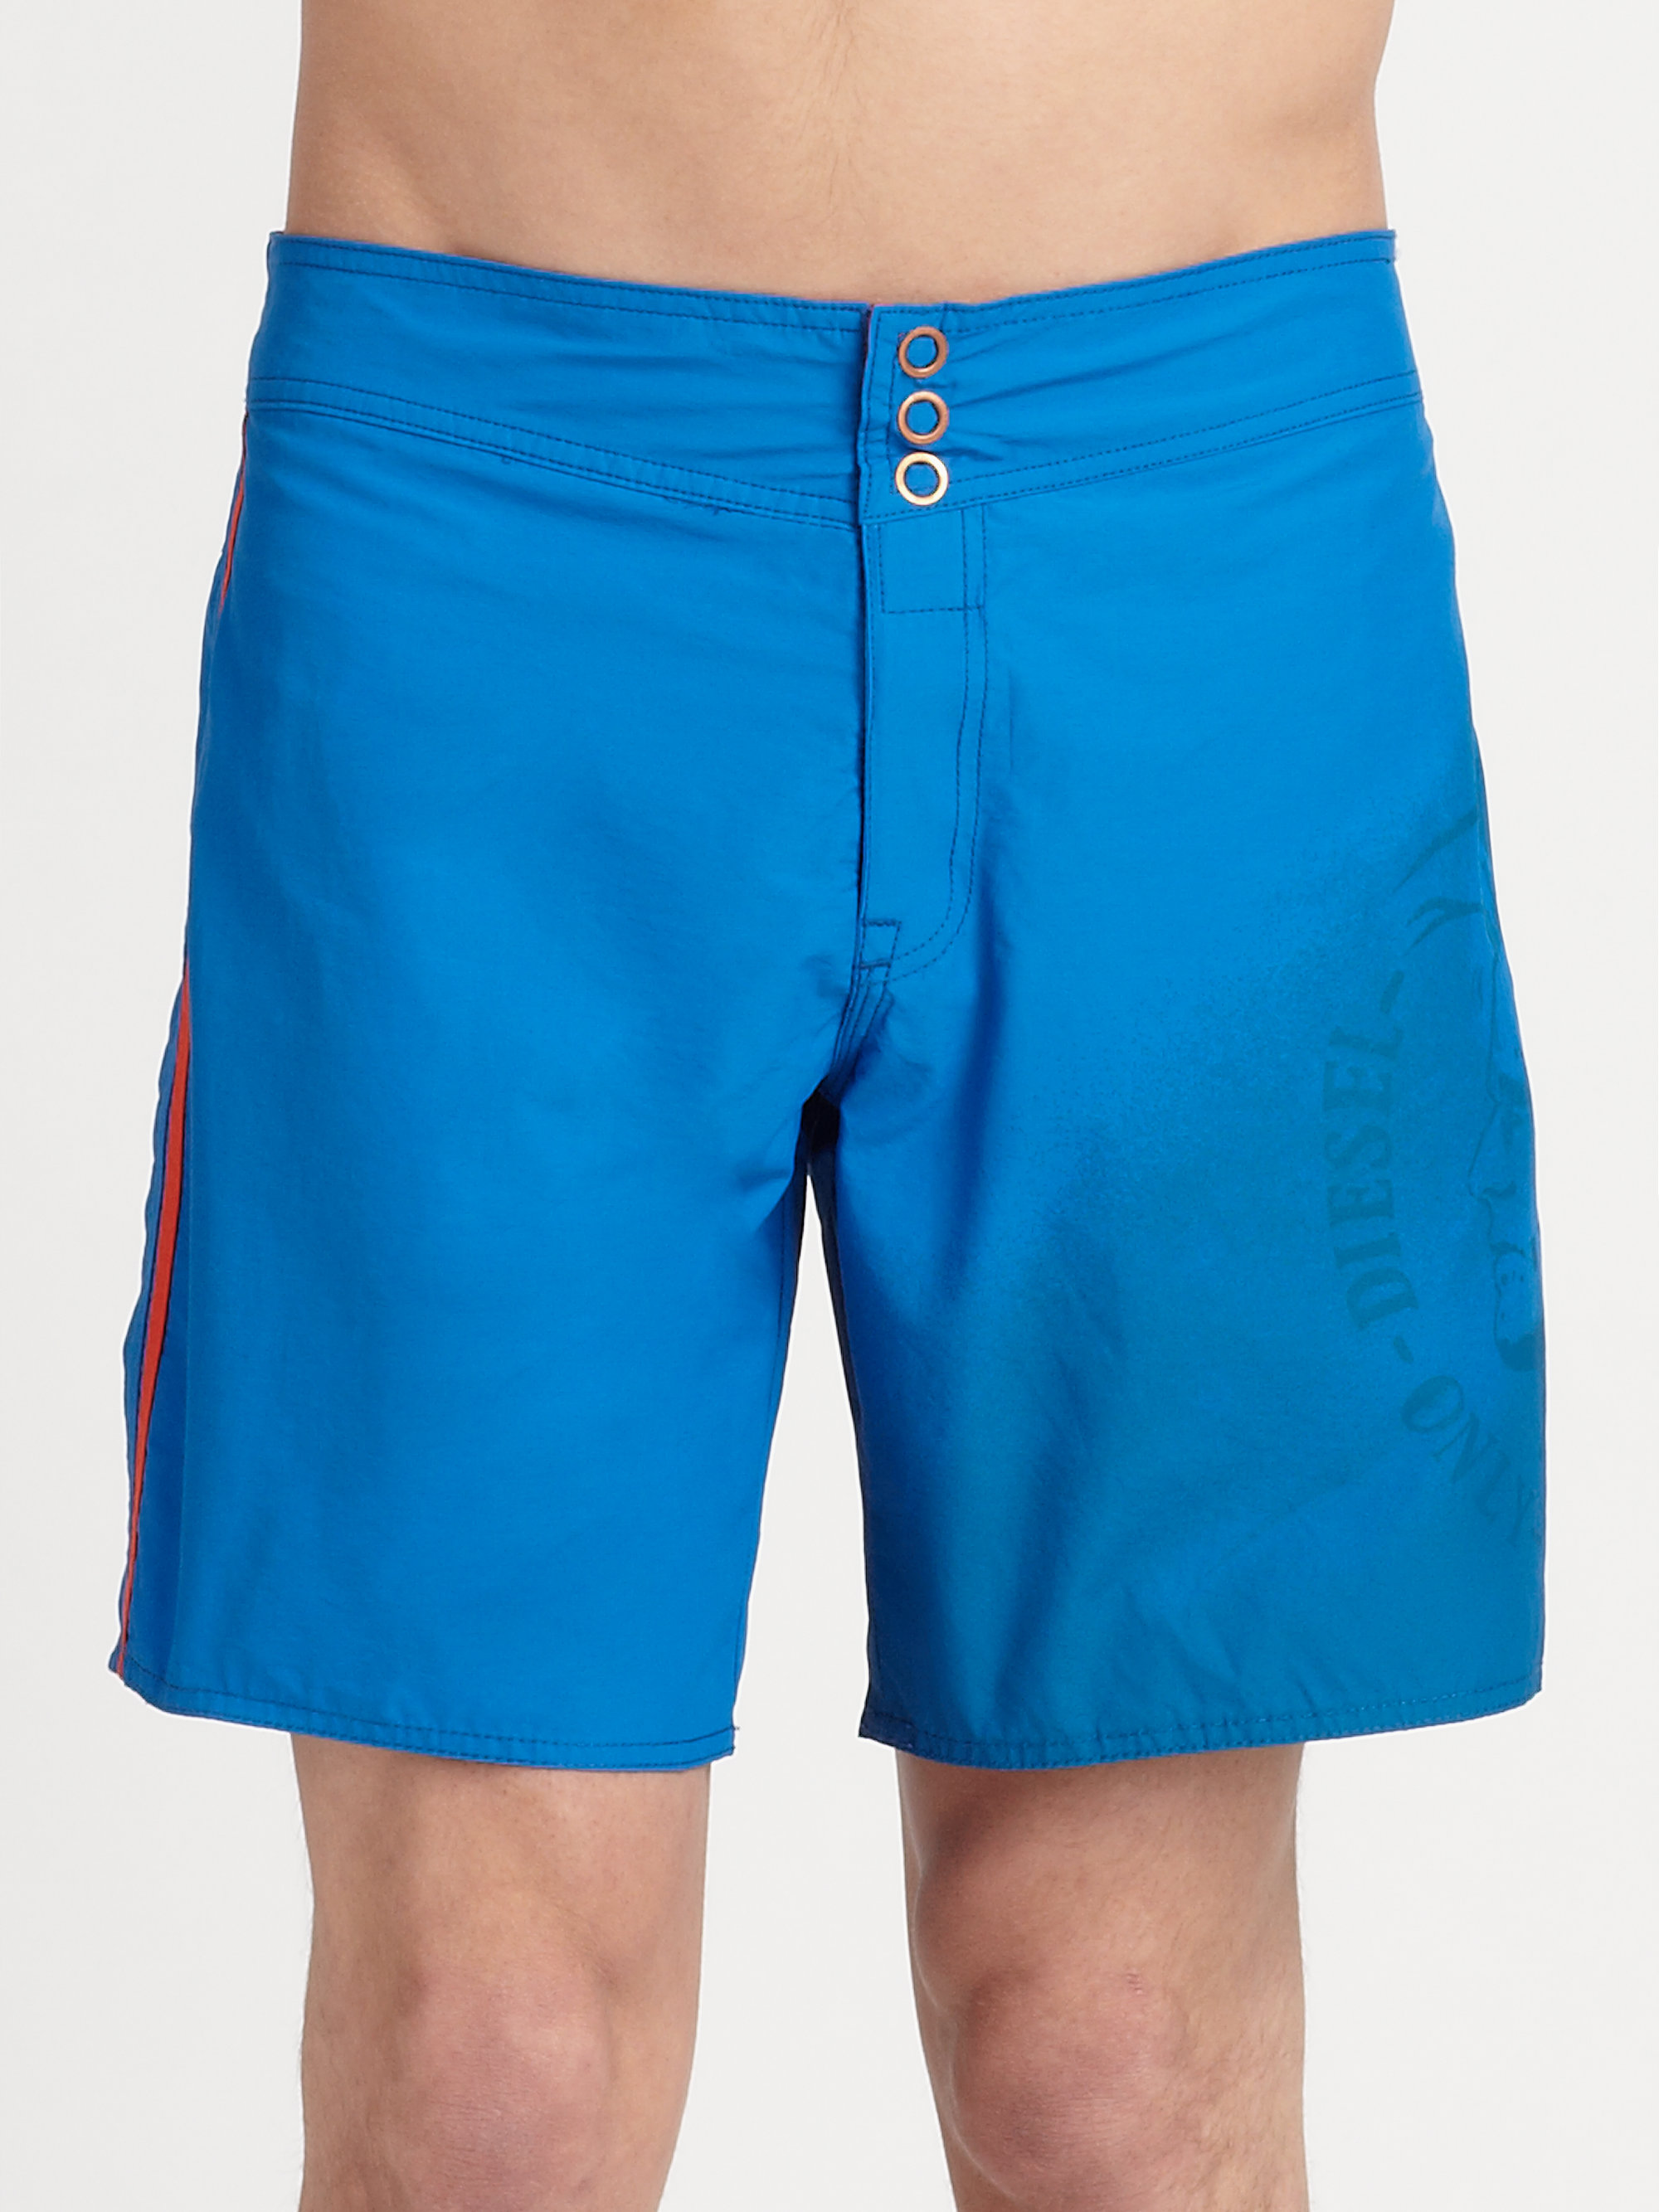 Lyst - Diesel Cotton-Blend Swim Shorts in Blue for Men